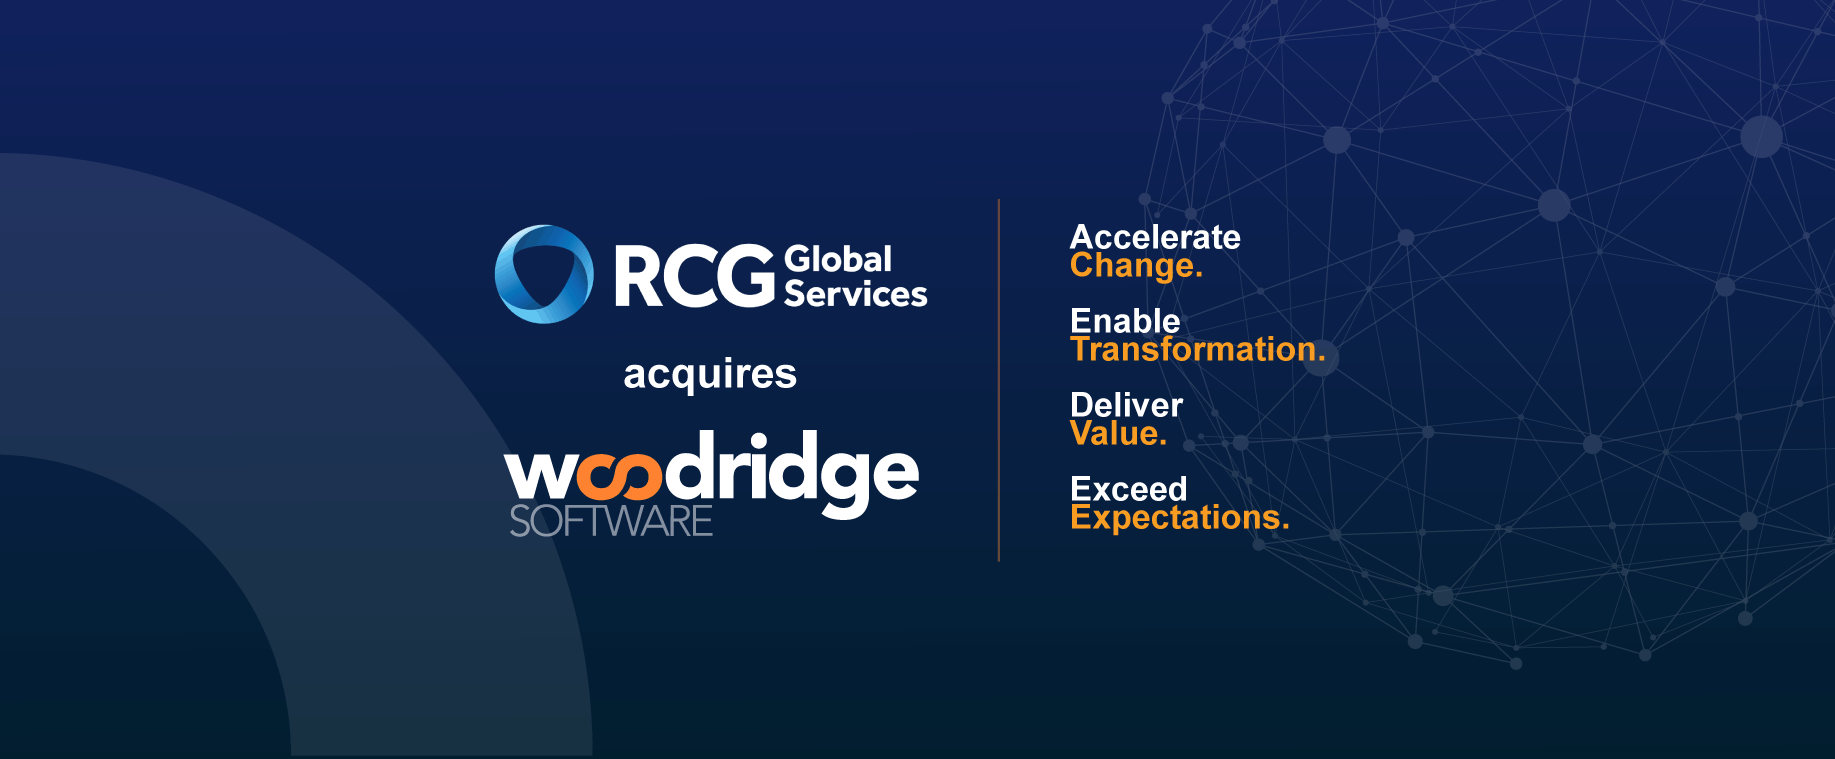 RCG-Woodridge-announcement-HubSpot-Featured-Image3